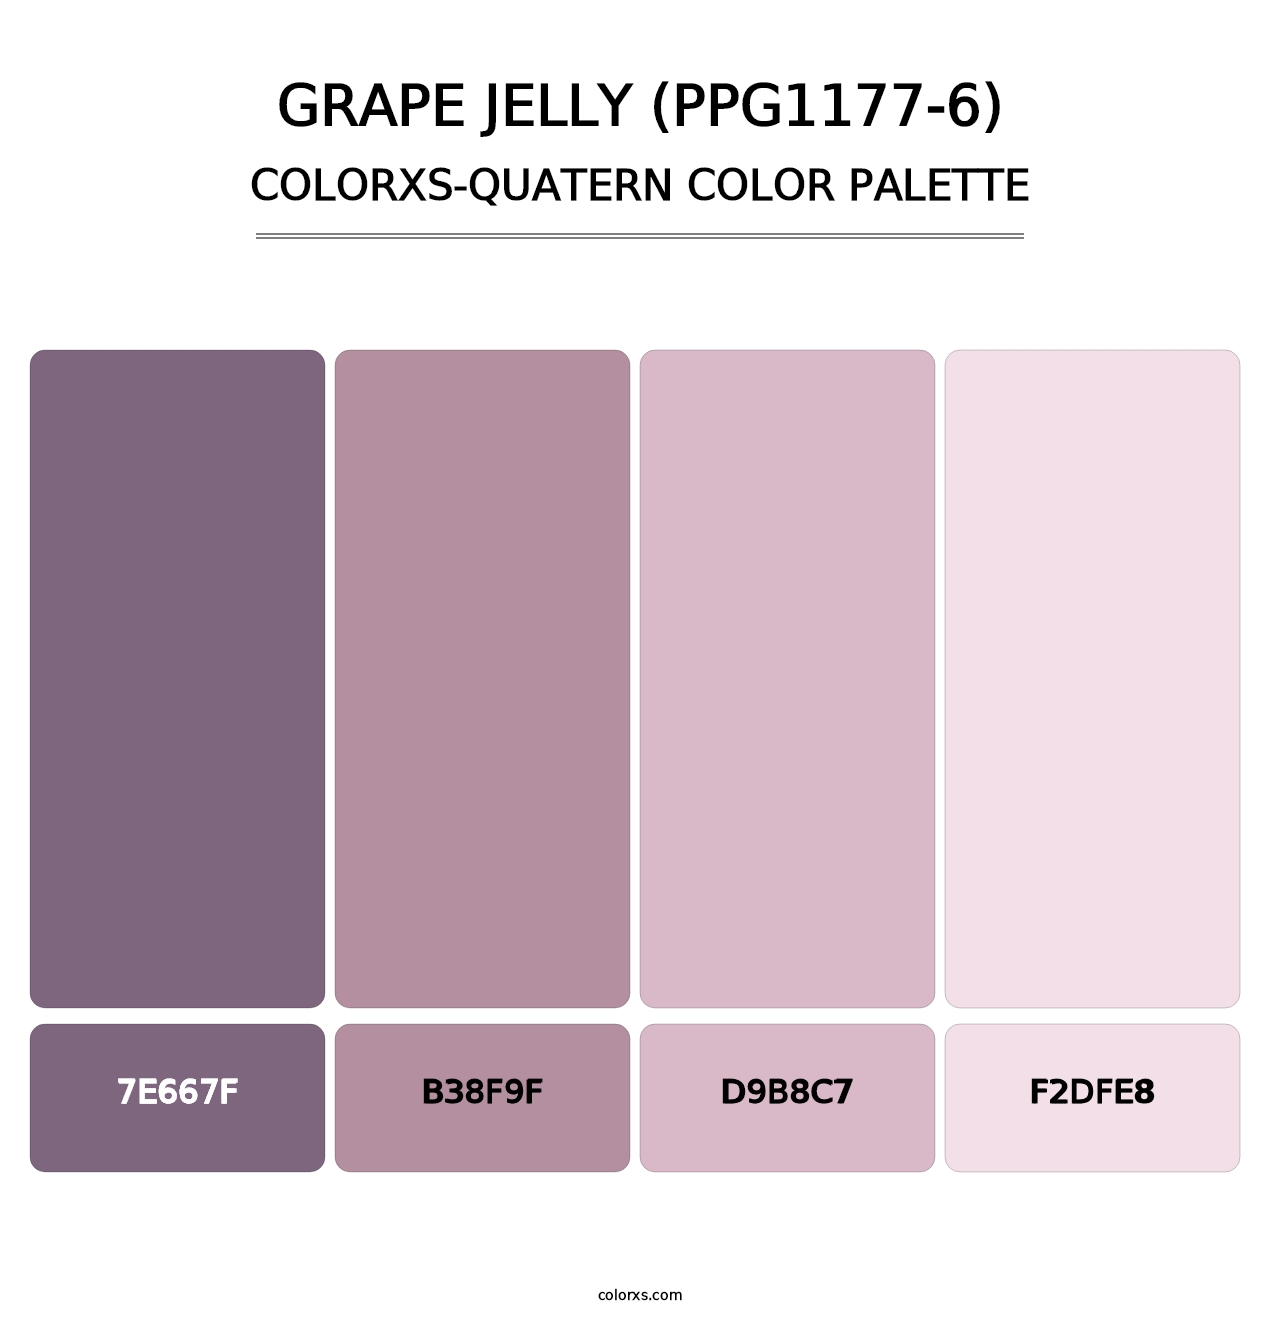 Grape Jelly (PPG1177-6) - Colorxs Quatern Palette